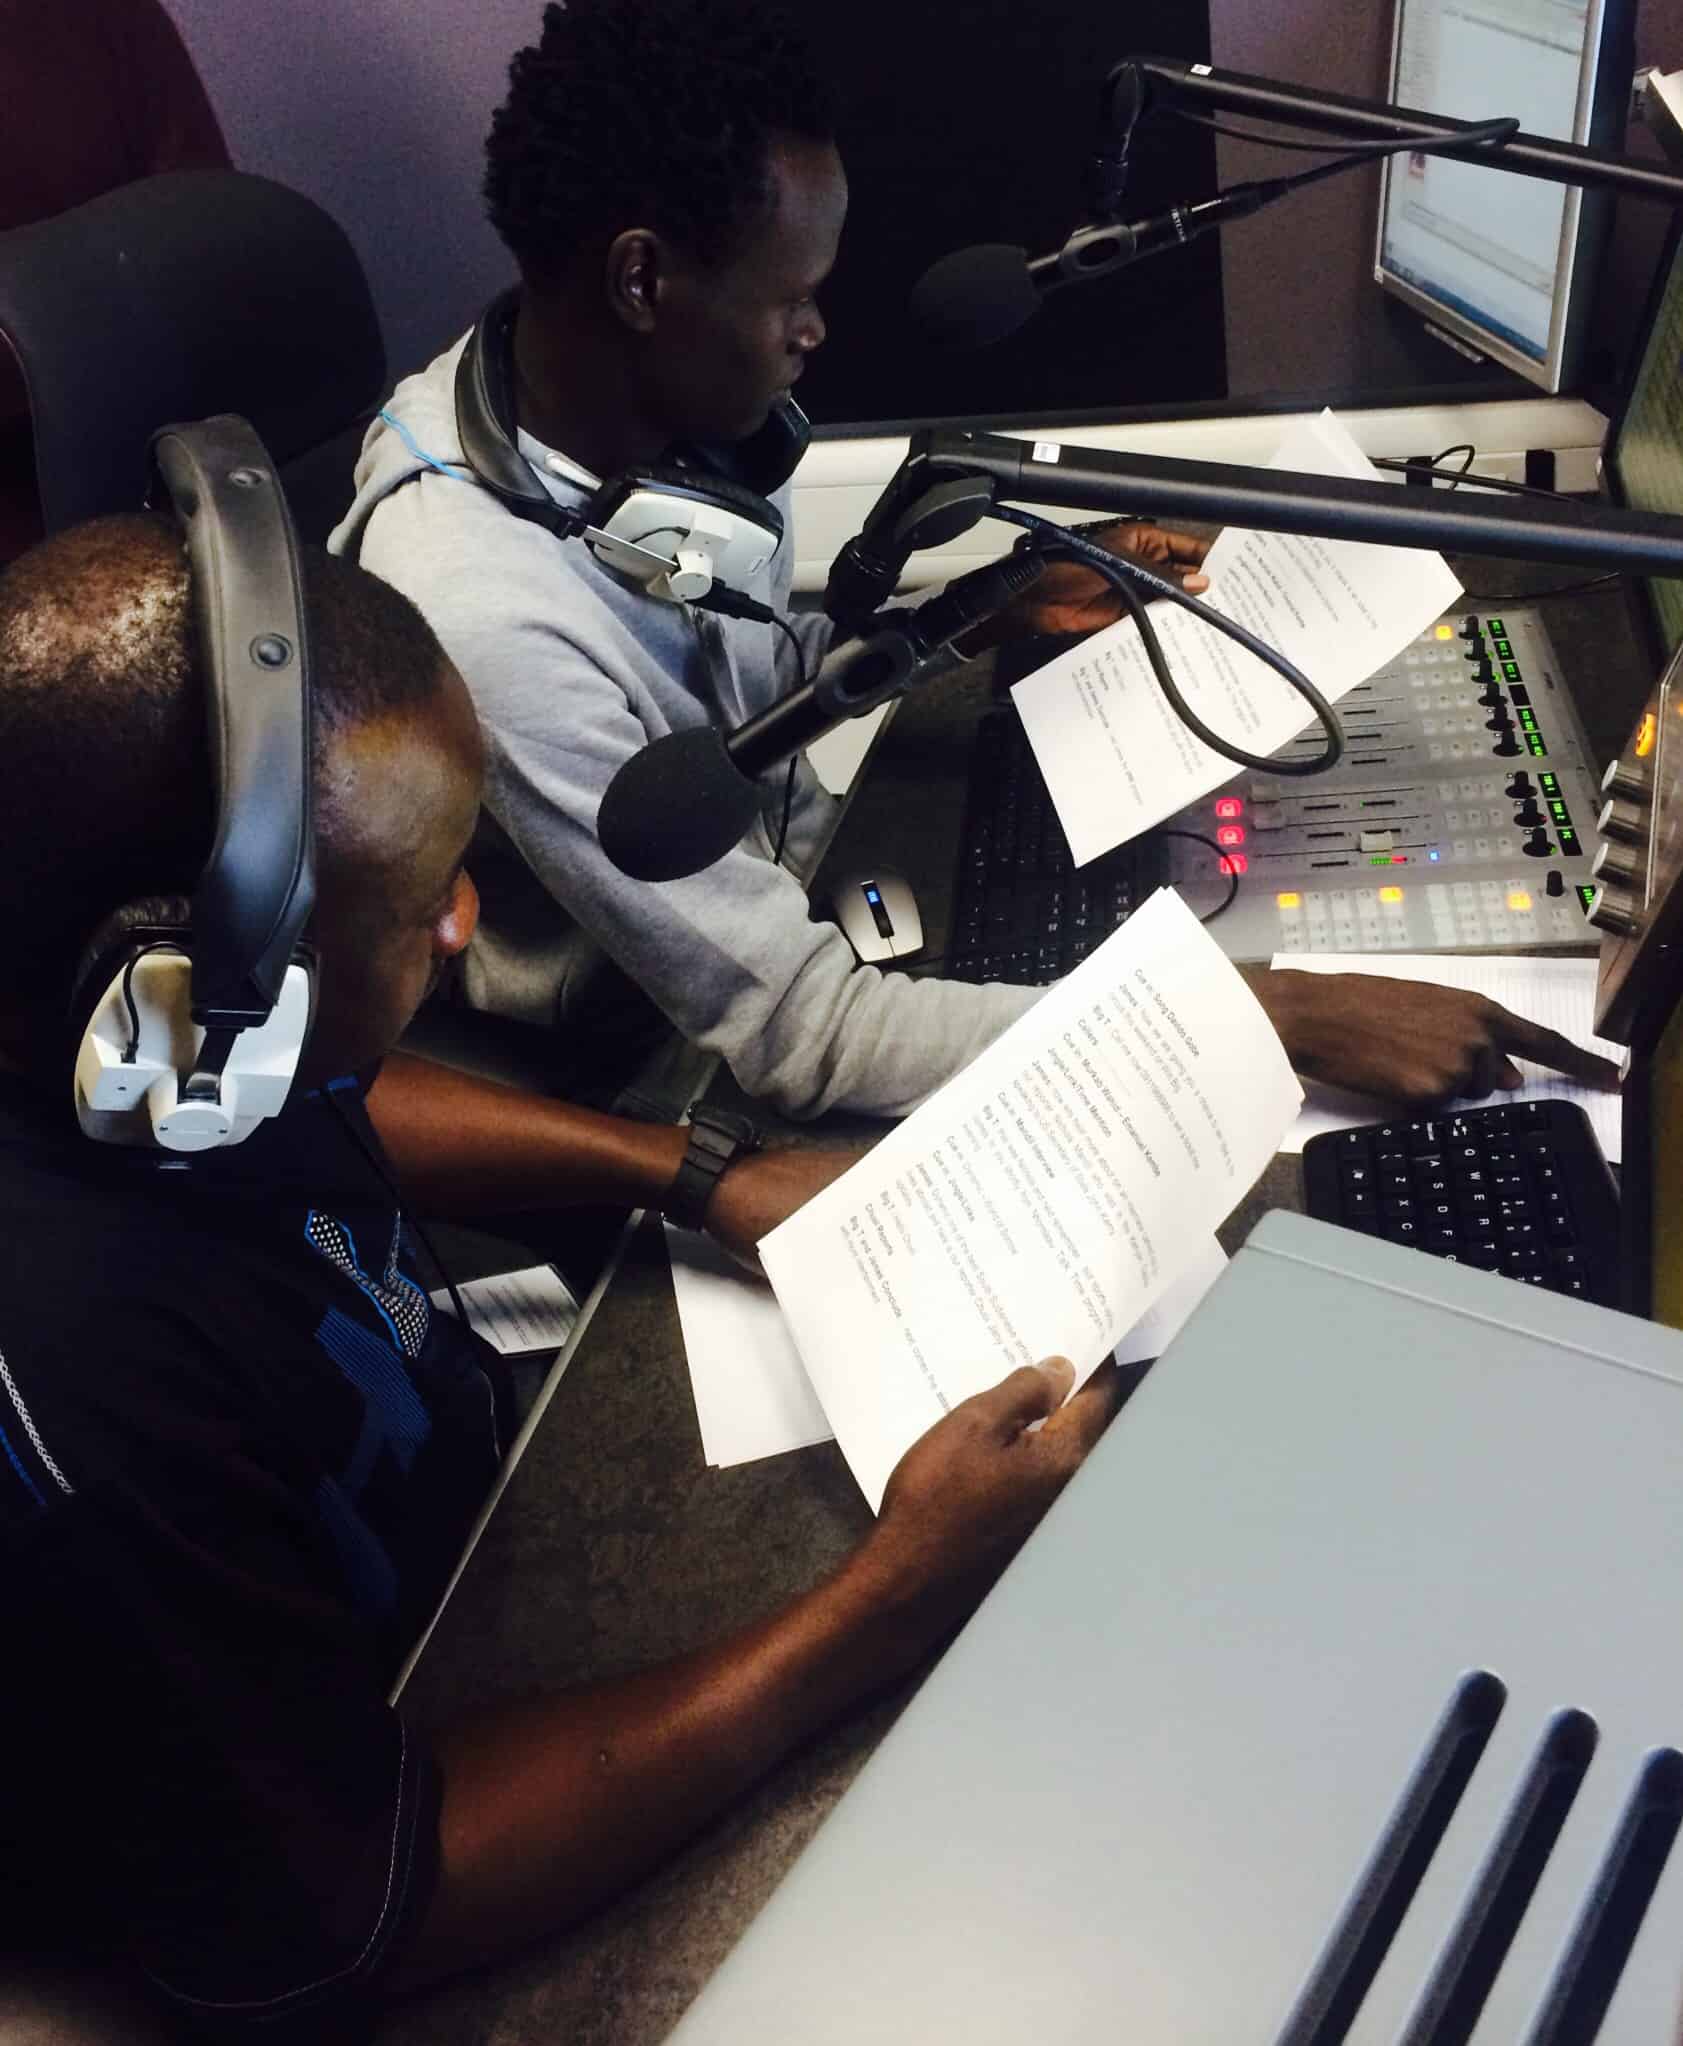 Two men sit at mics in a radio studio looking at scripts.